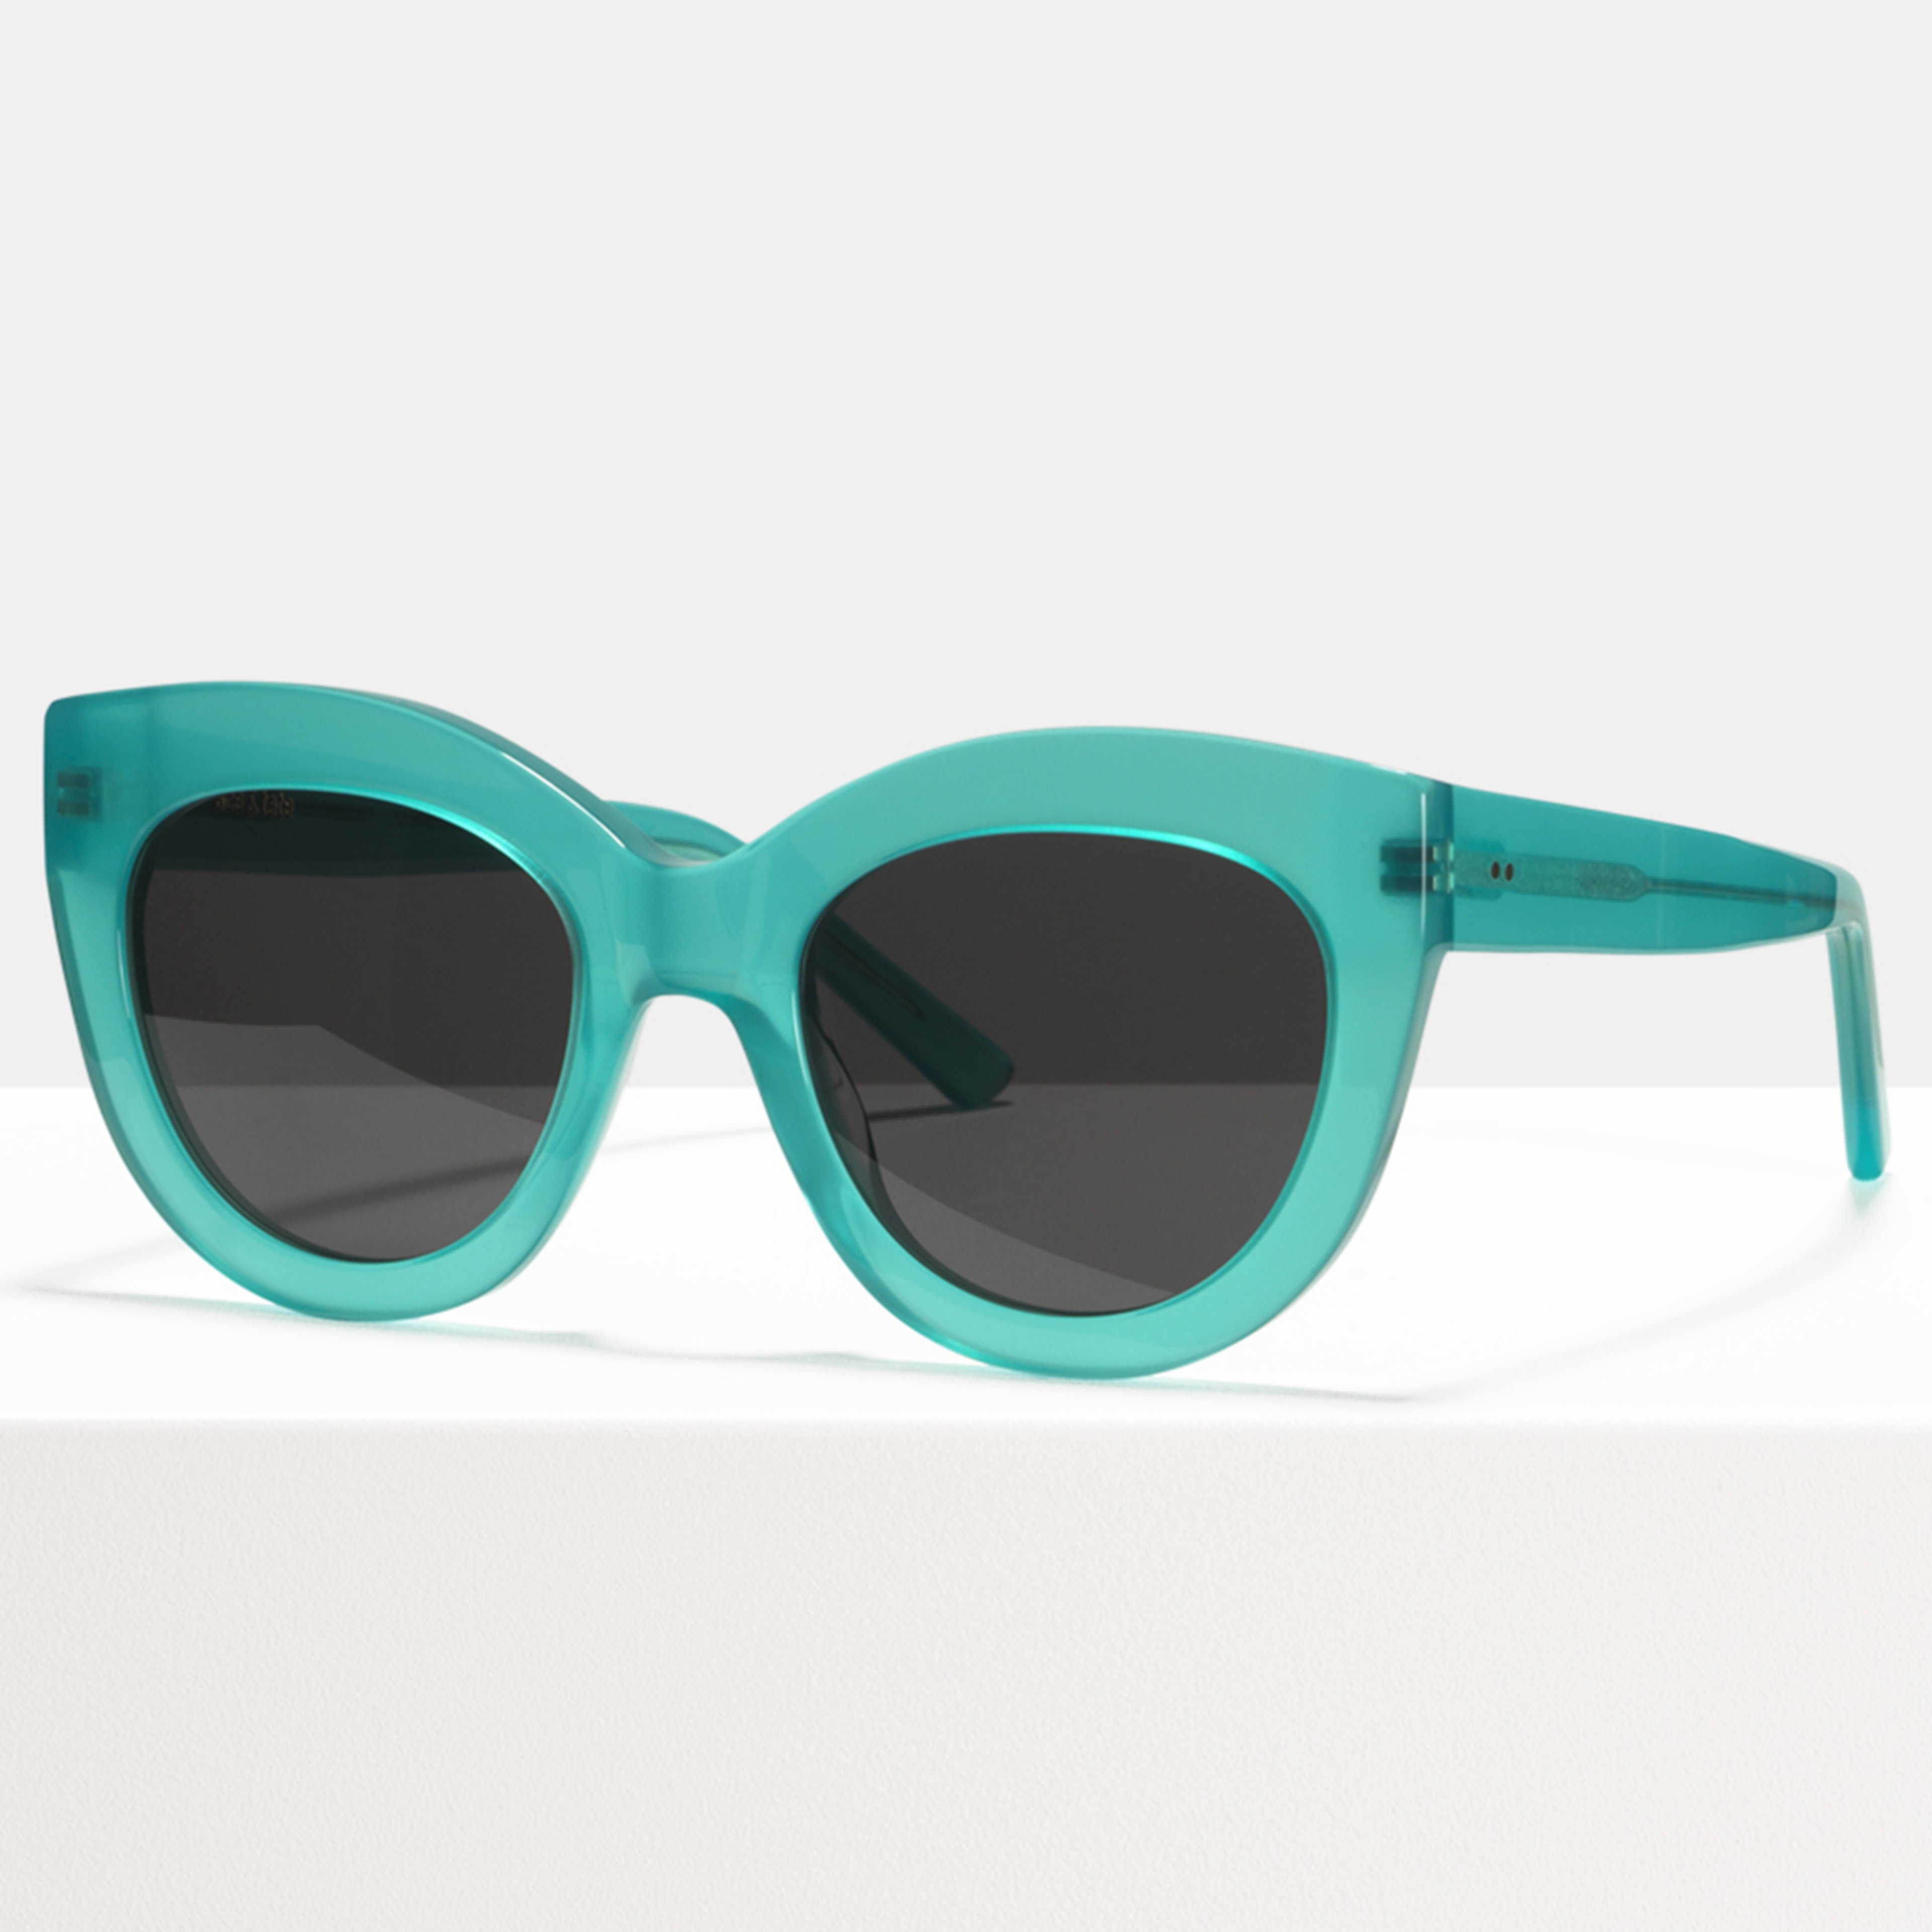 Ace & Tate Sonnenbrillen |  Acetat in Blau, Grün